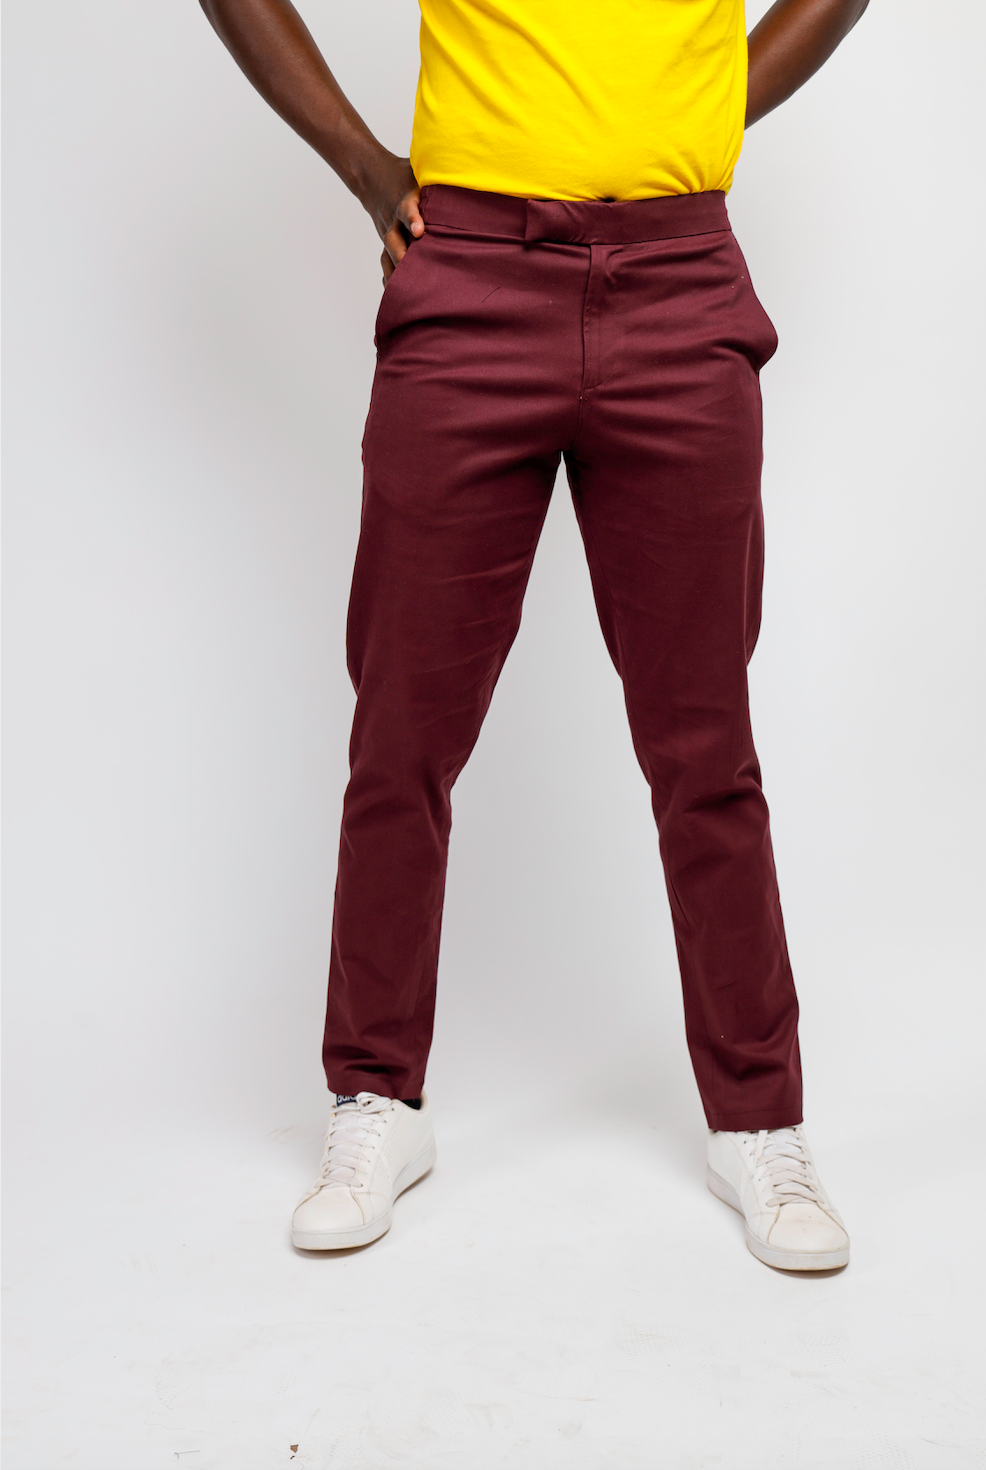 Maroon Khaki pants - GENTEEL - Image Is Half The Story Told